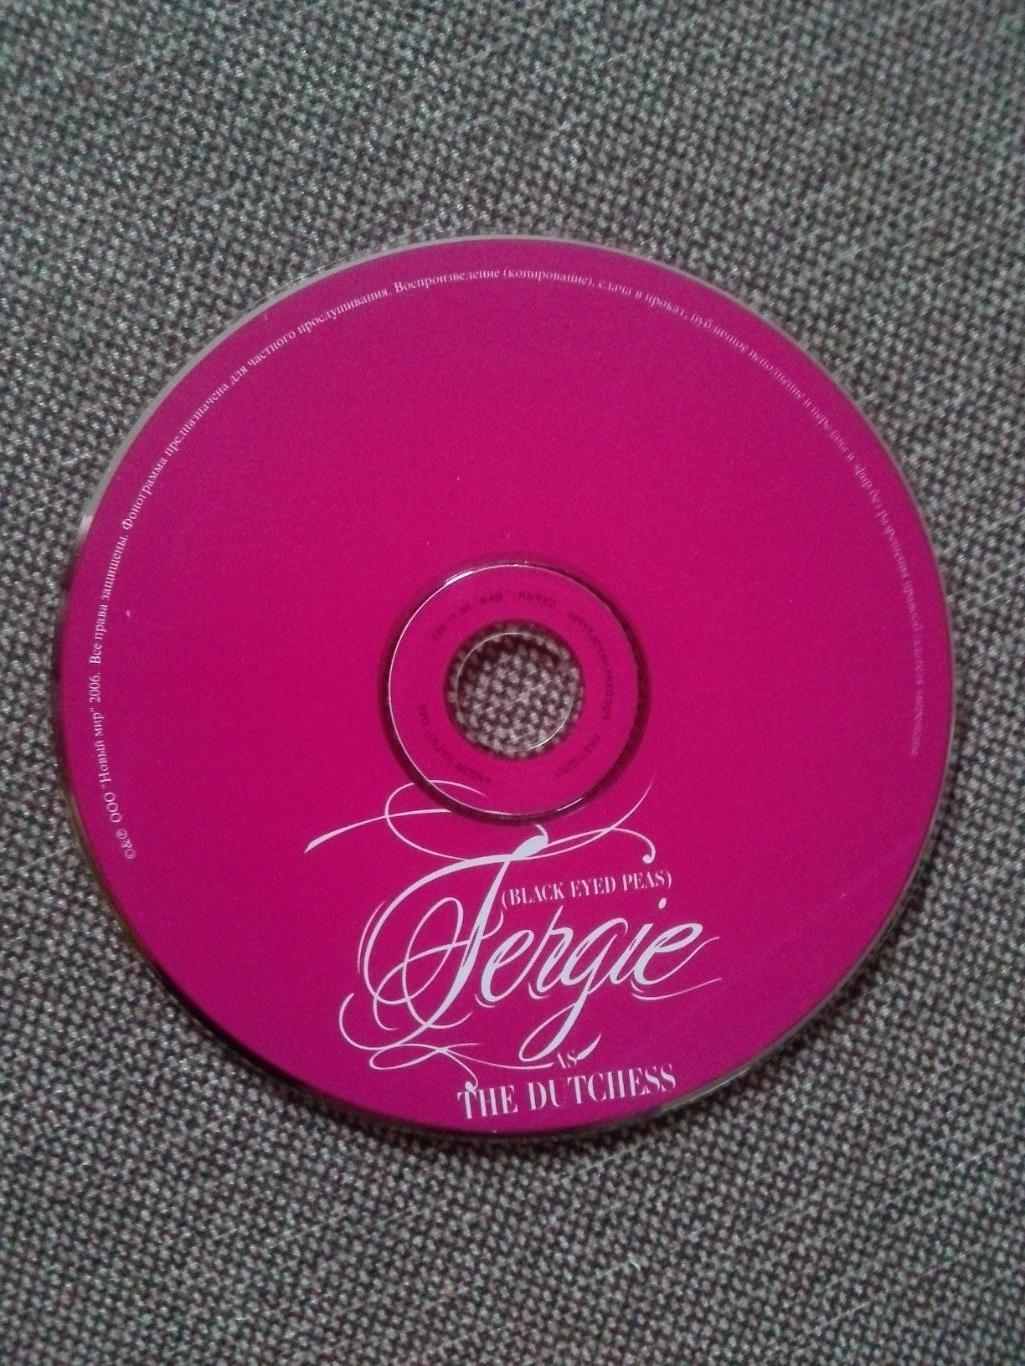 CD диск :Fergie-The Dutchess(Black Eyed Peas) студийный альбом 2007 5